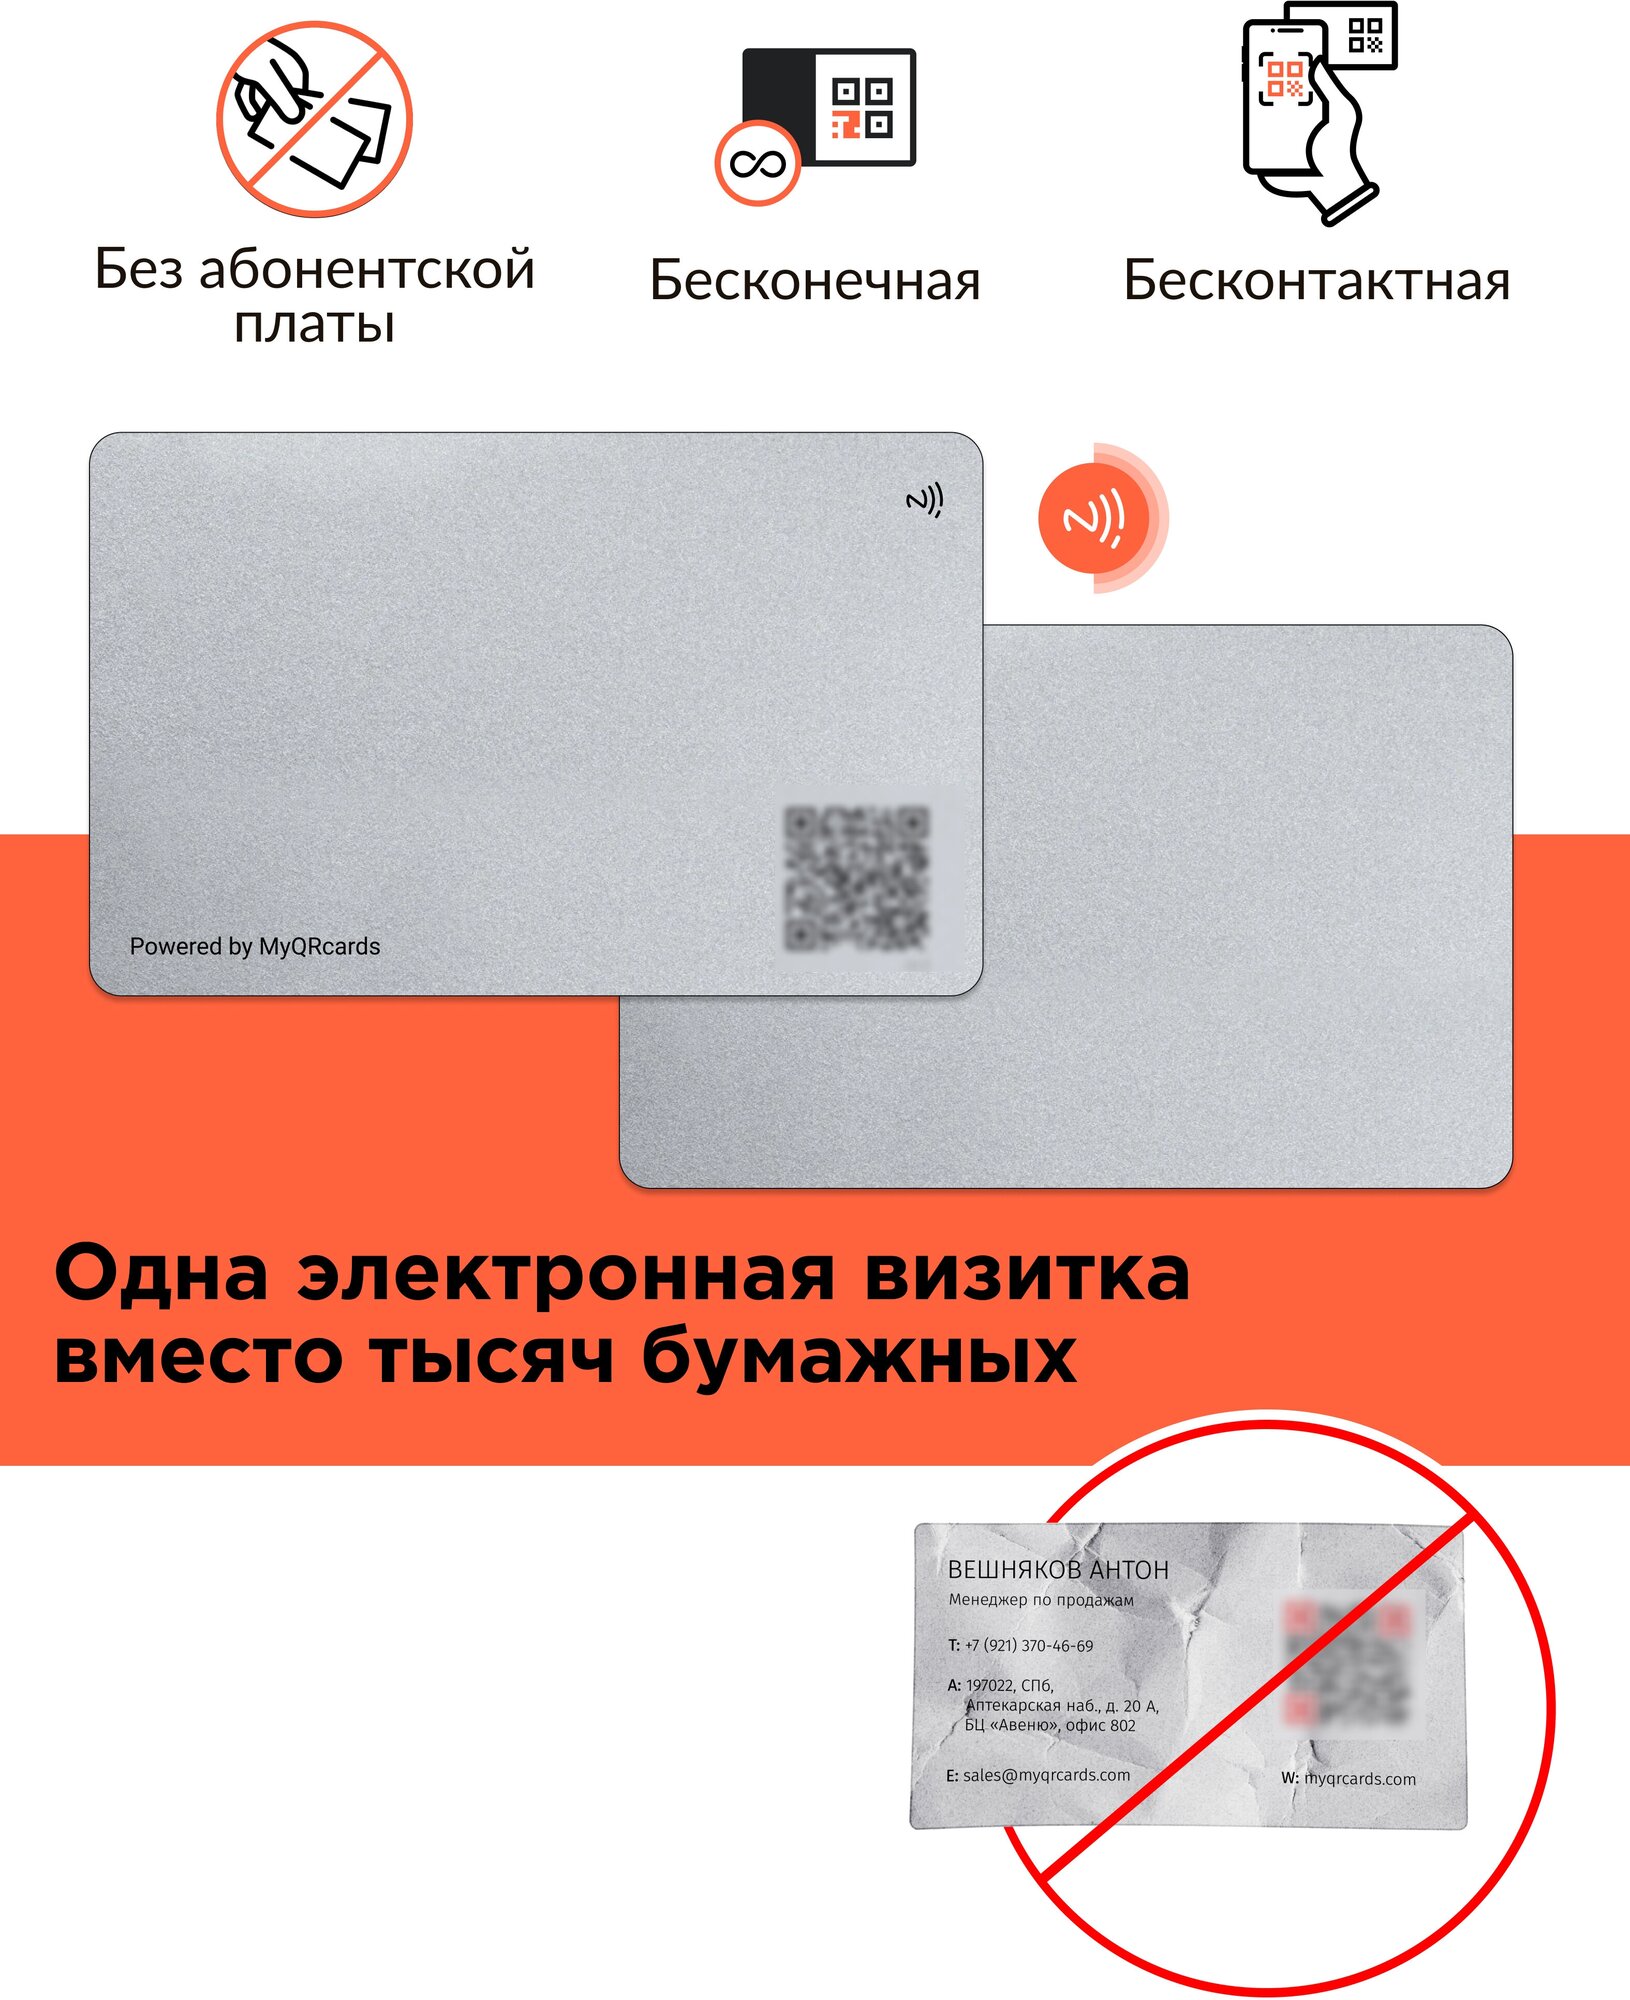 Умная электронная визитка на NFC-карте